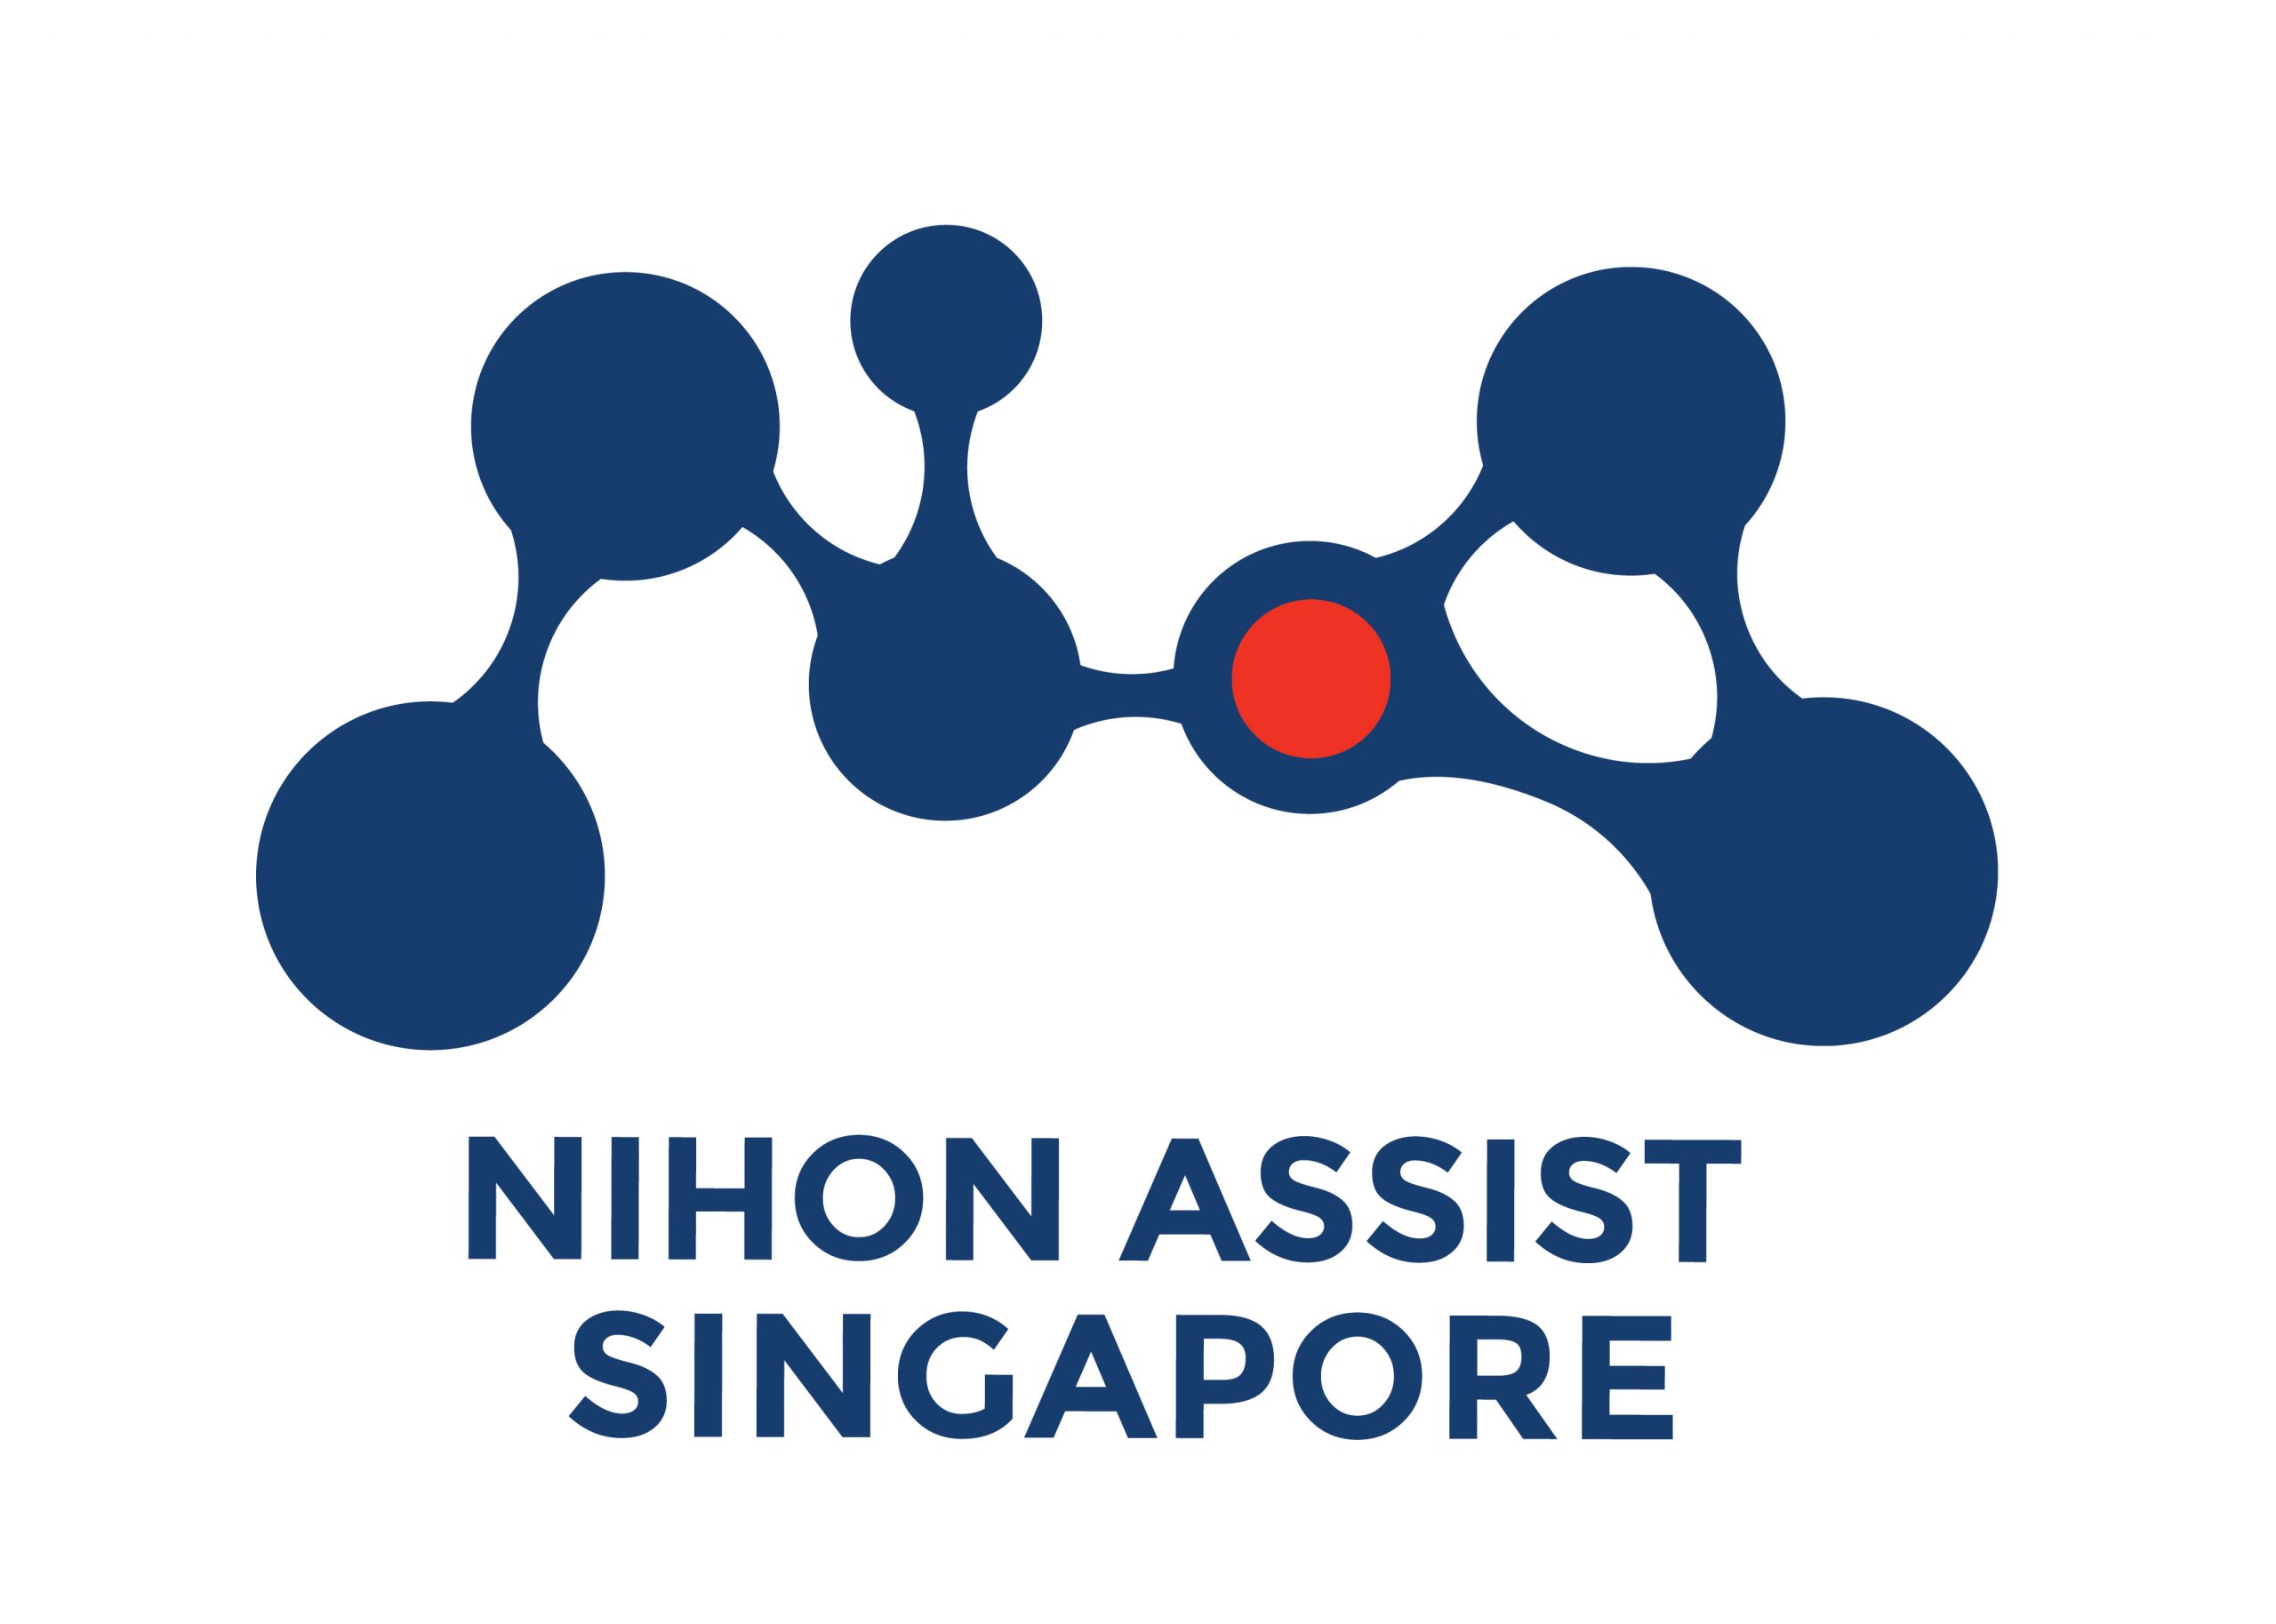 Nihhon Assist Singapore